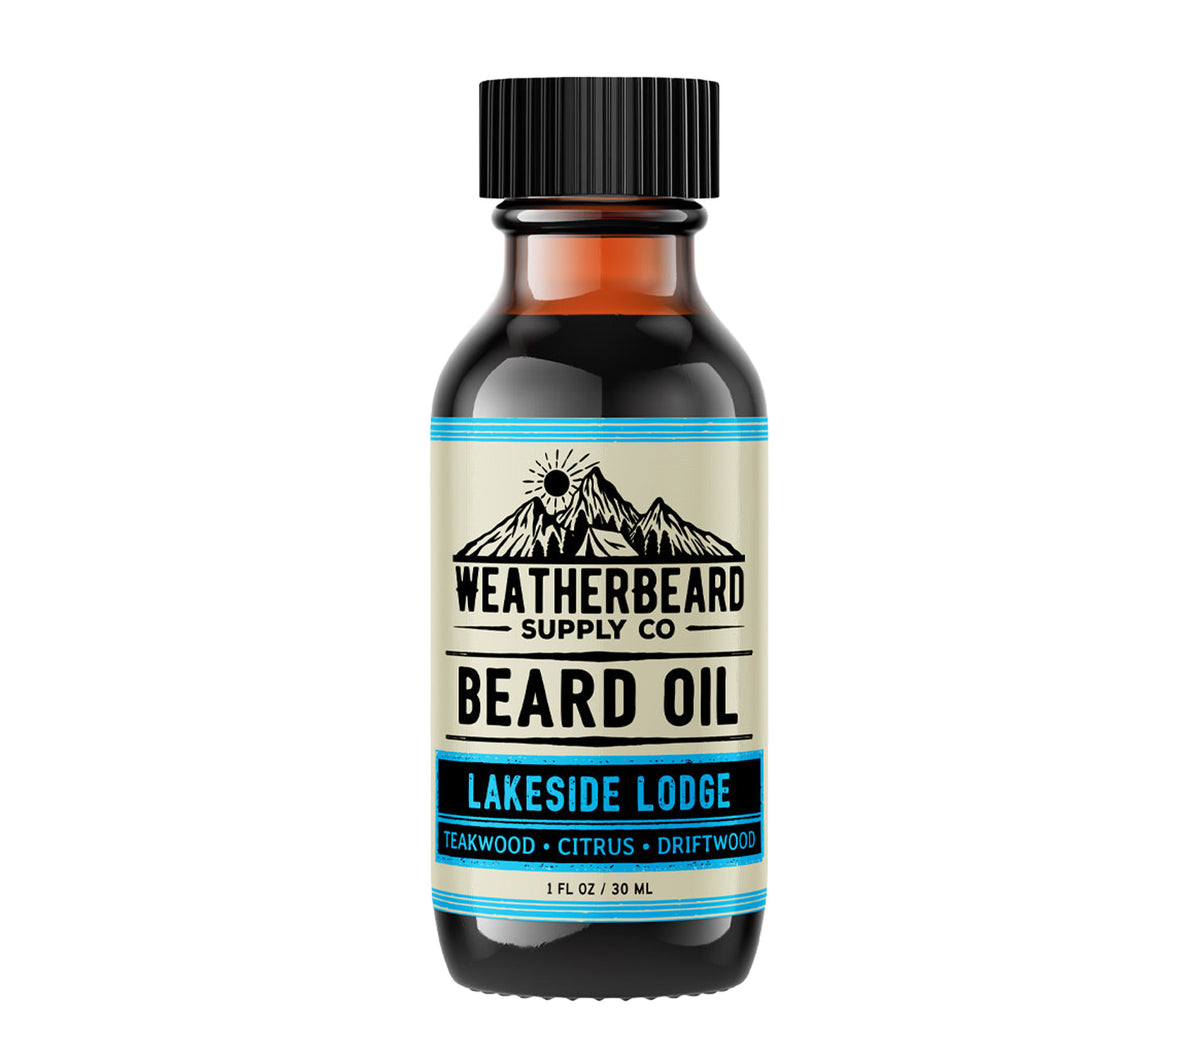 Signature Beard Oil